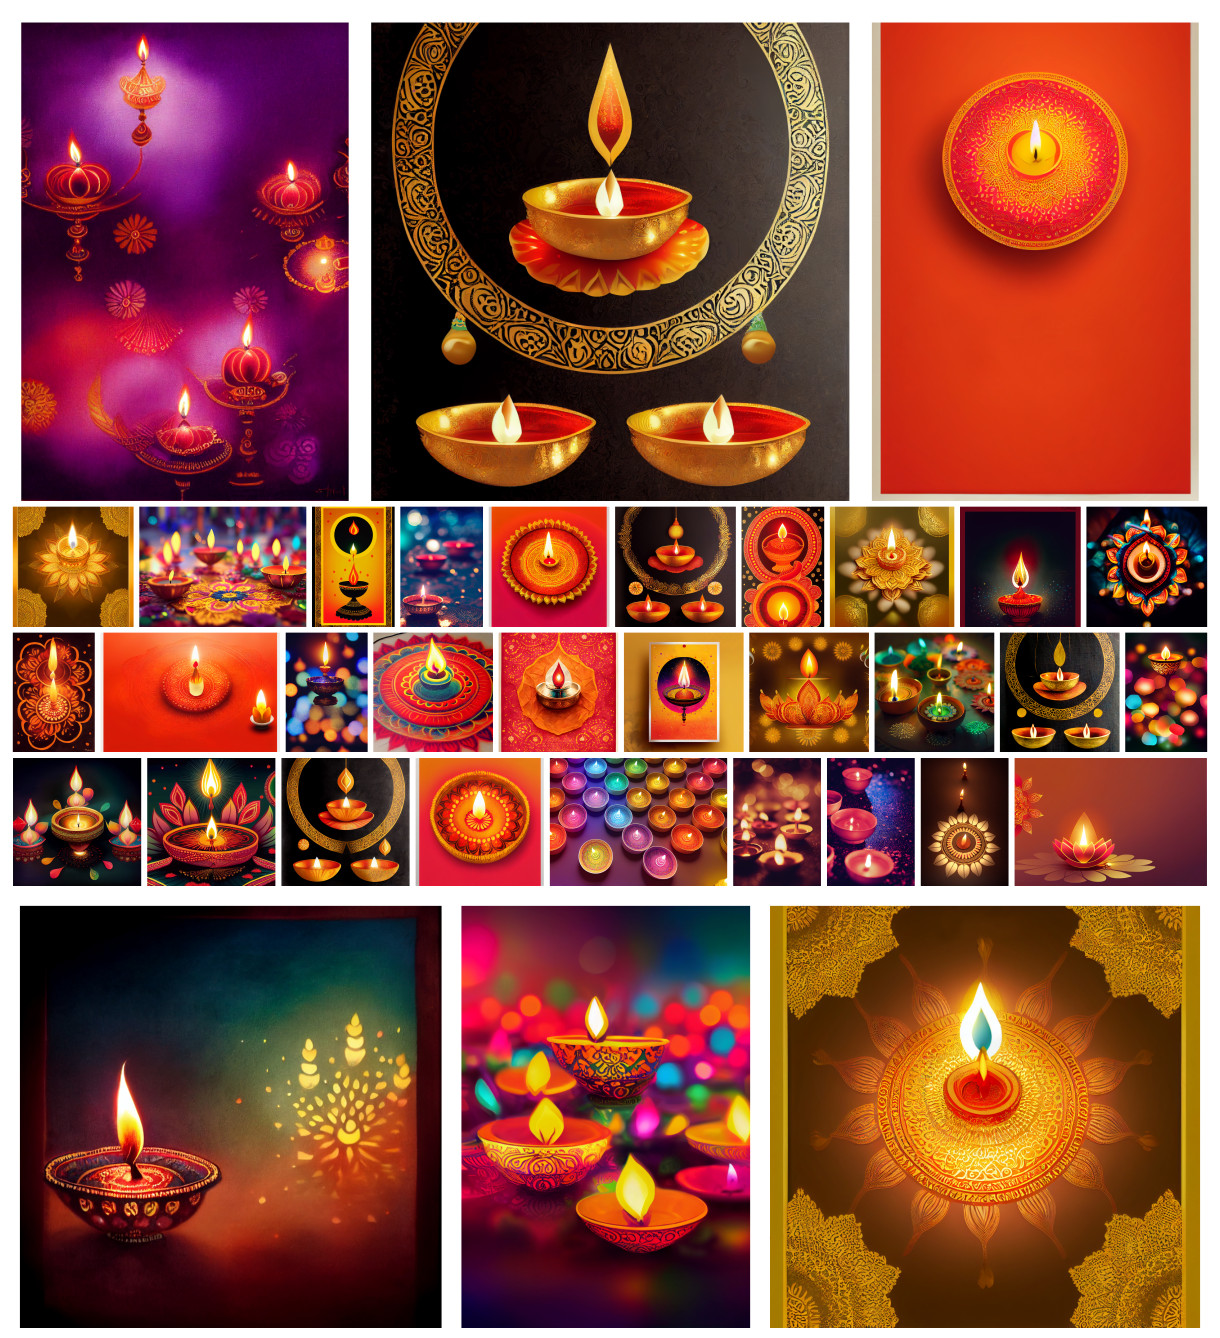 Dazzling Diwali Diya Backgrounds: 35 Free Designs for Your Festival of Lights